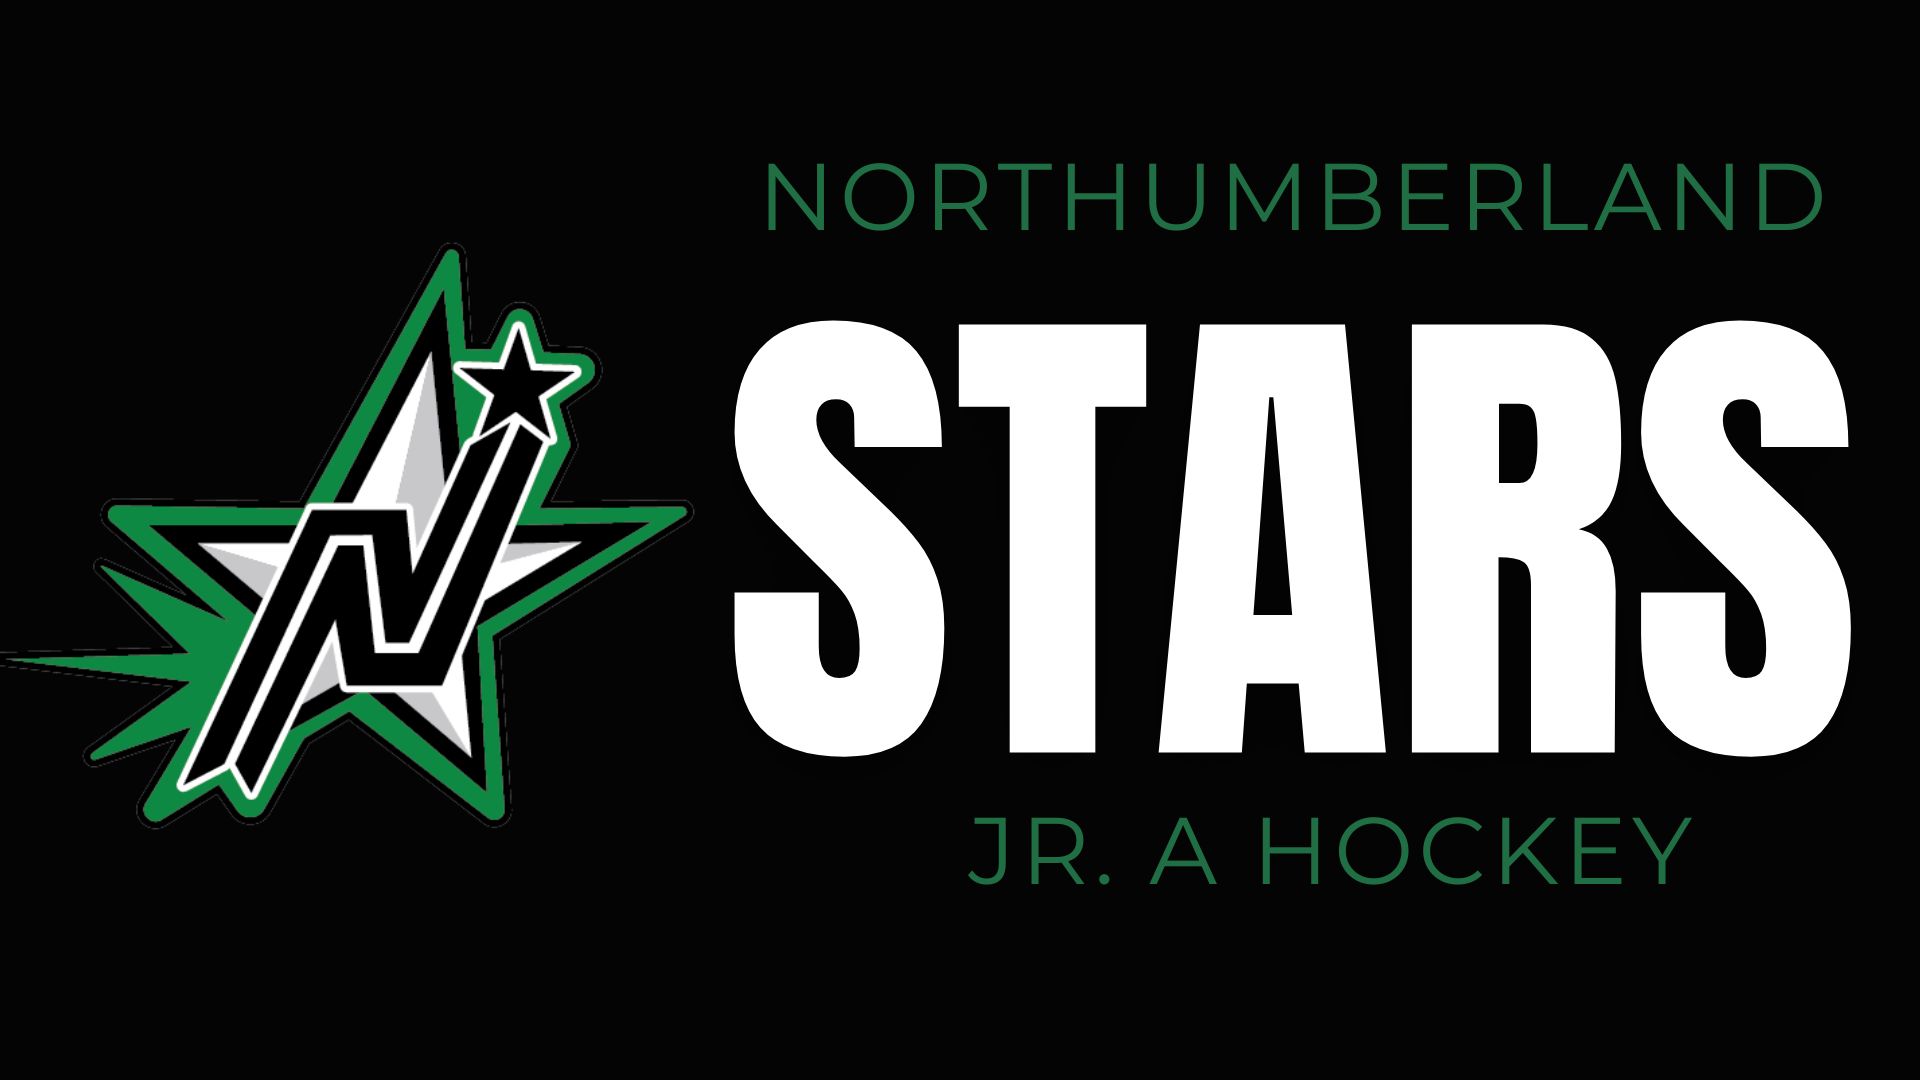 Northumberland Stars